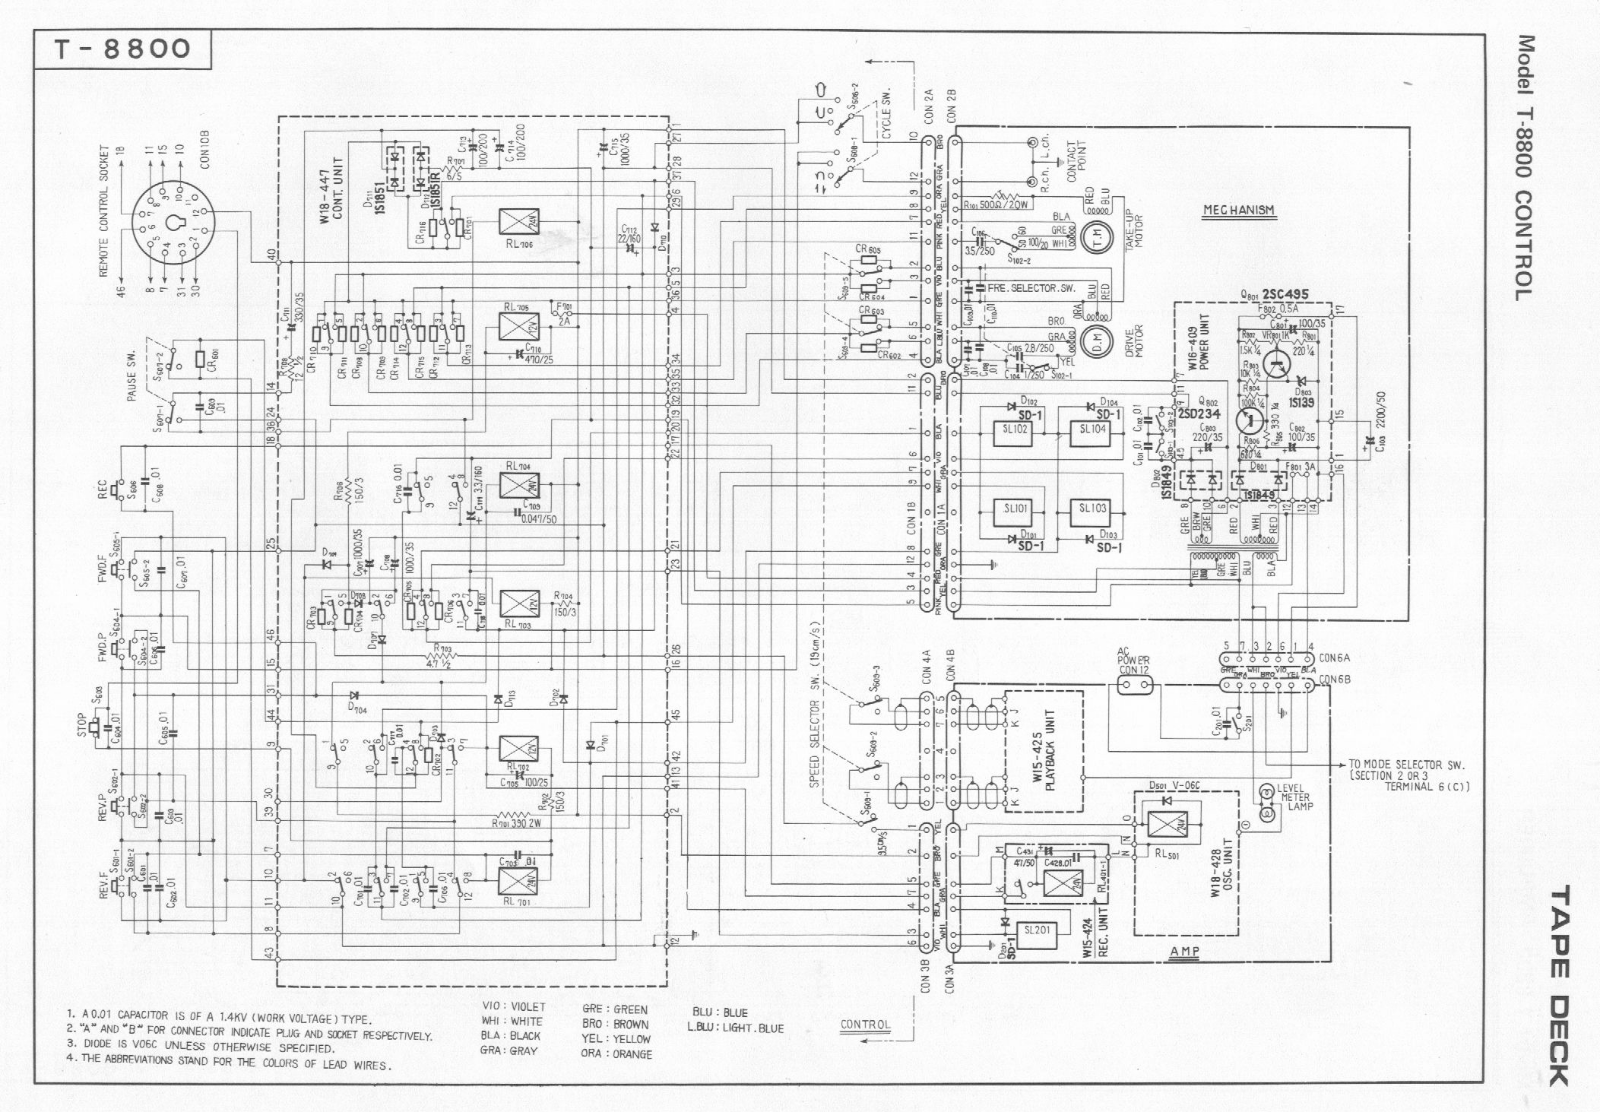 Pioneer T-8800 Schematic